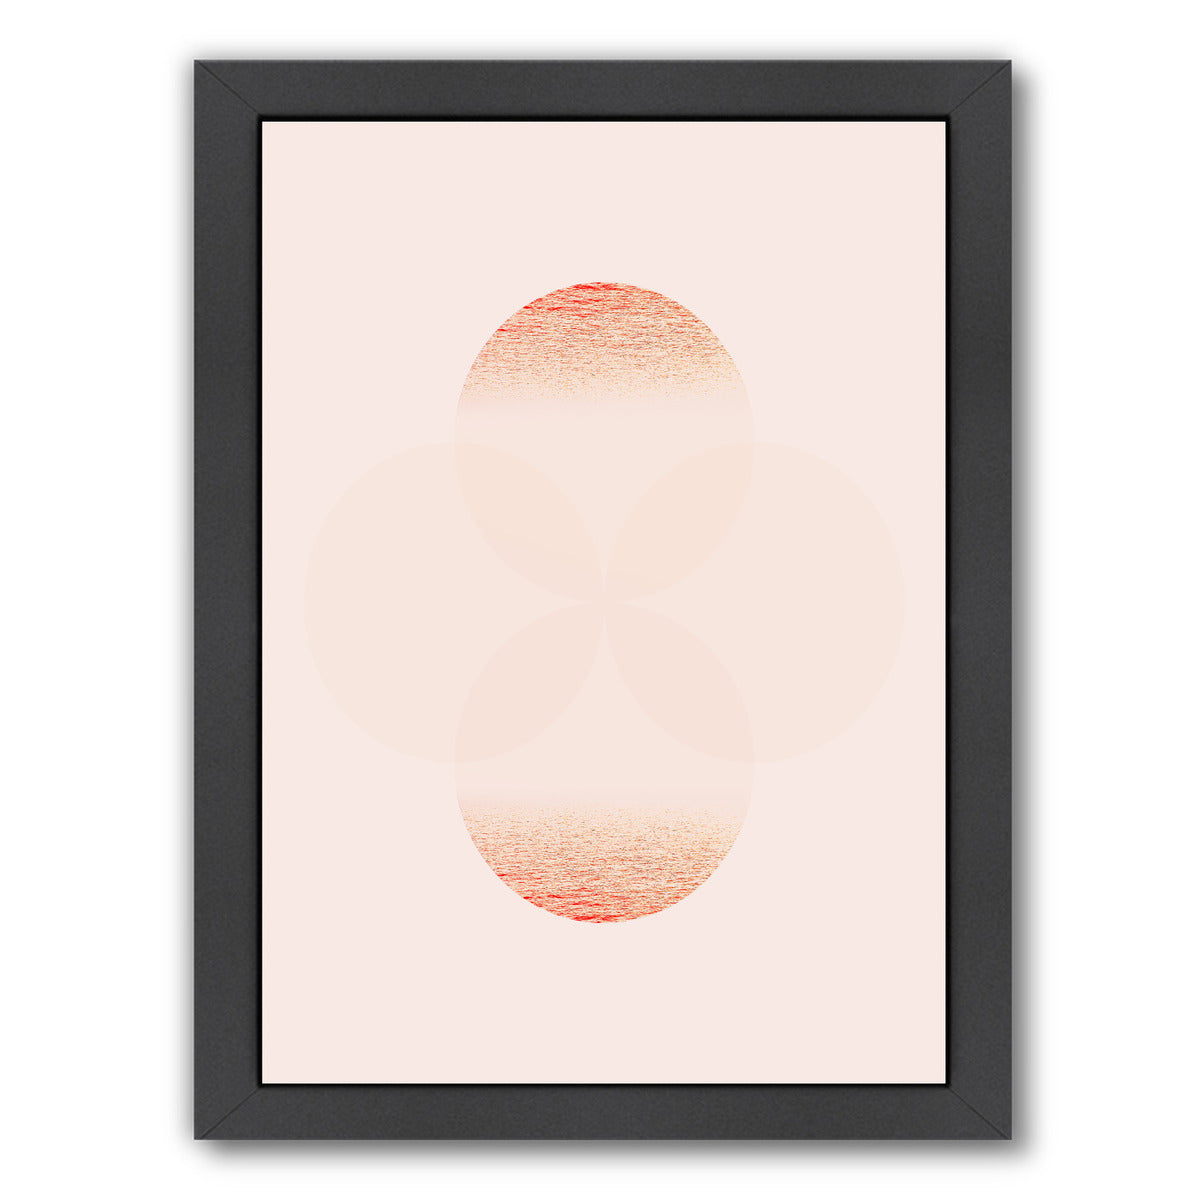 Lunar Blush I by Hope Bainbridge - Black Framed Print - Wall Art - Americanflat